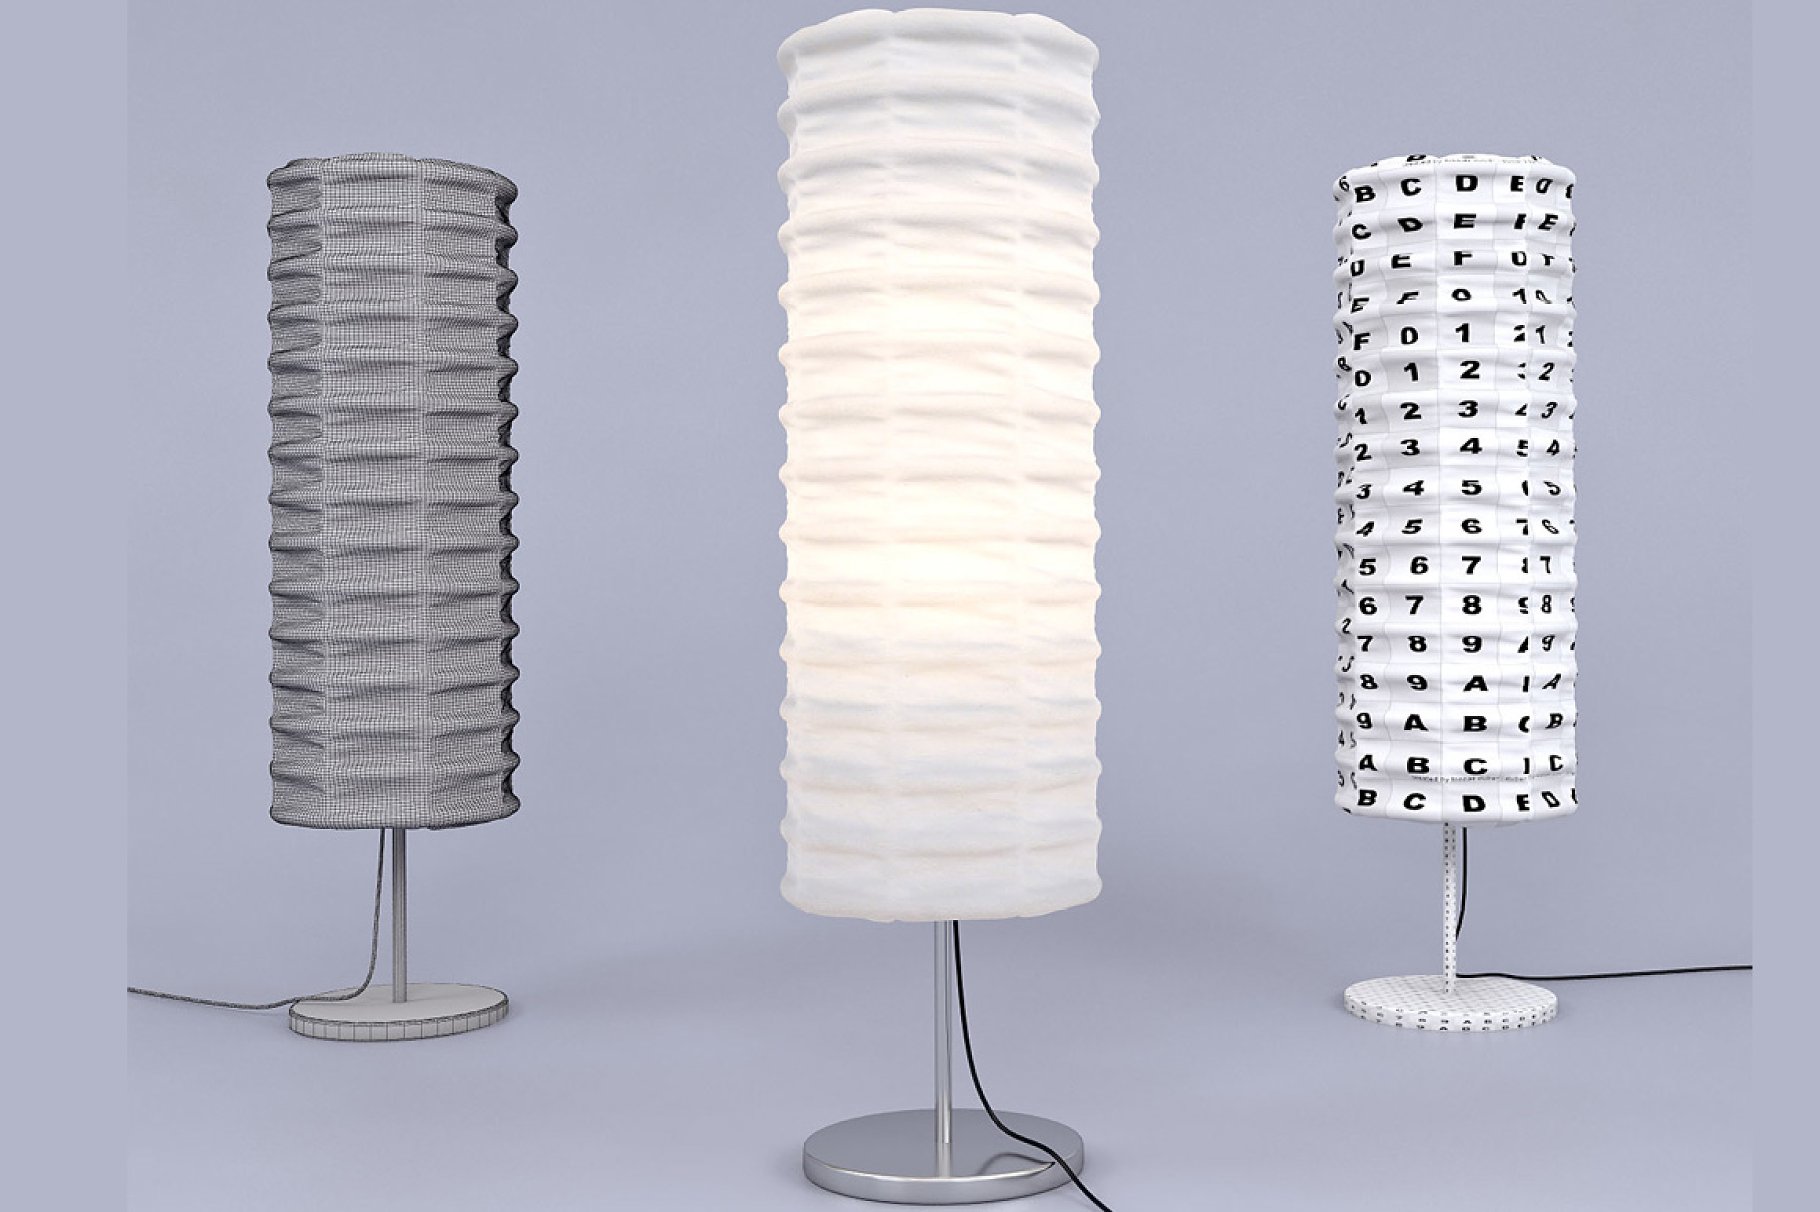 Rendering of beautiful 3d models of floor lamps